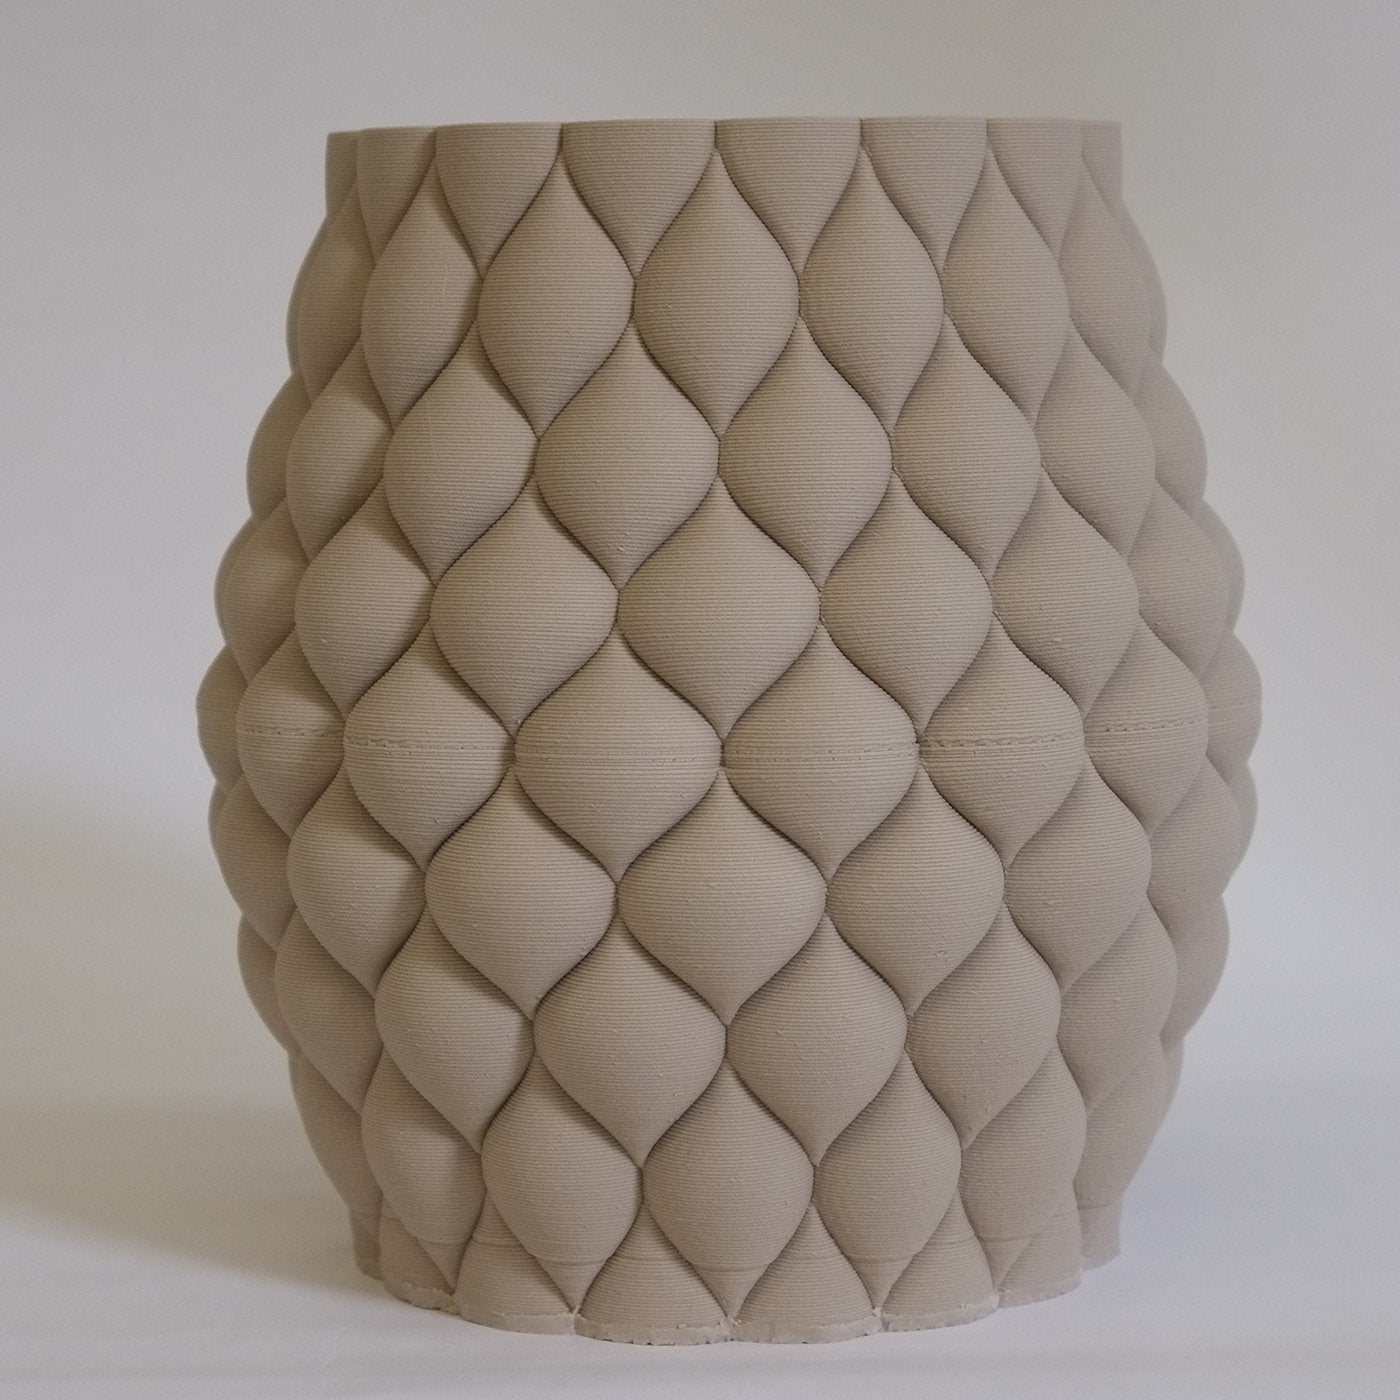 India Raw Beige Vase #2 - Alternative view 1